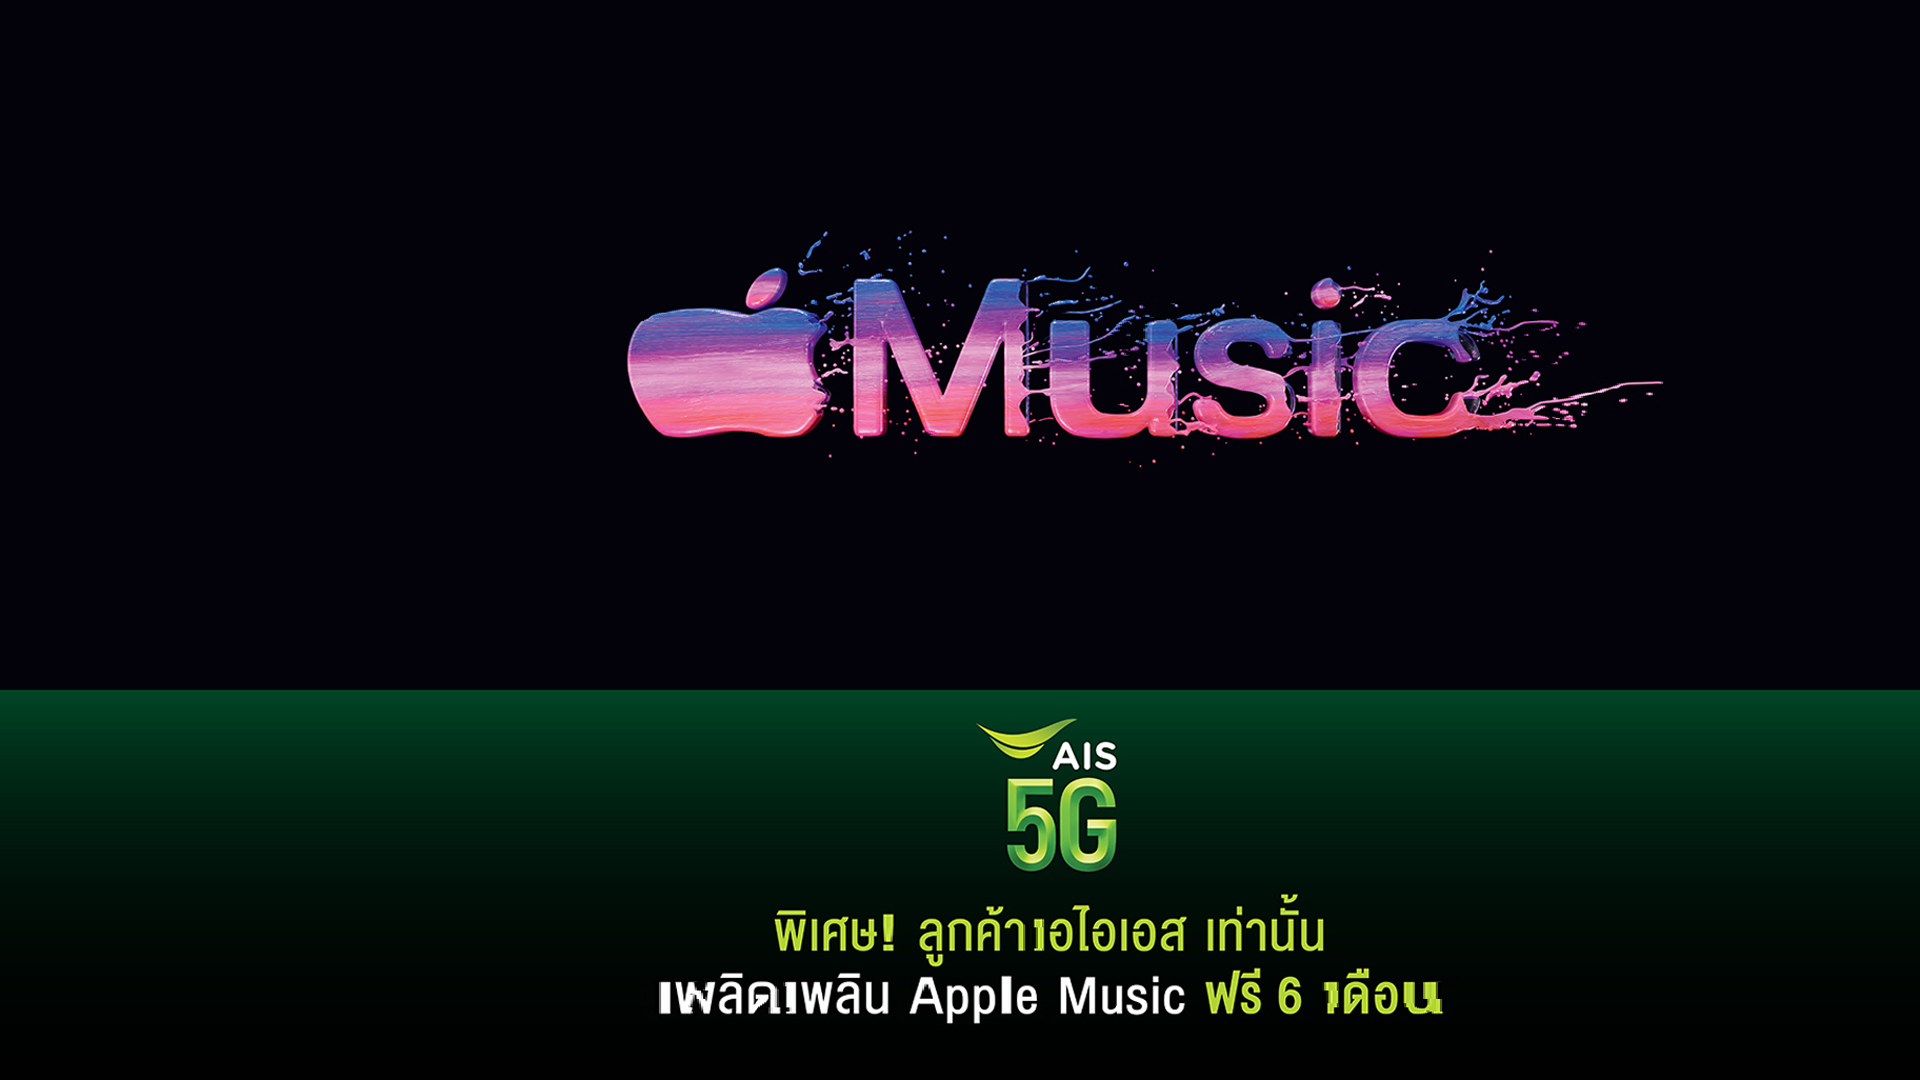 AIS เอาใจคนรักเสียงเพลงมอบประสบการณ์ฟังเพลงบน Apple Music ฟรี 6 เดือน